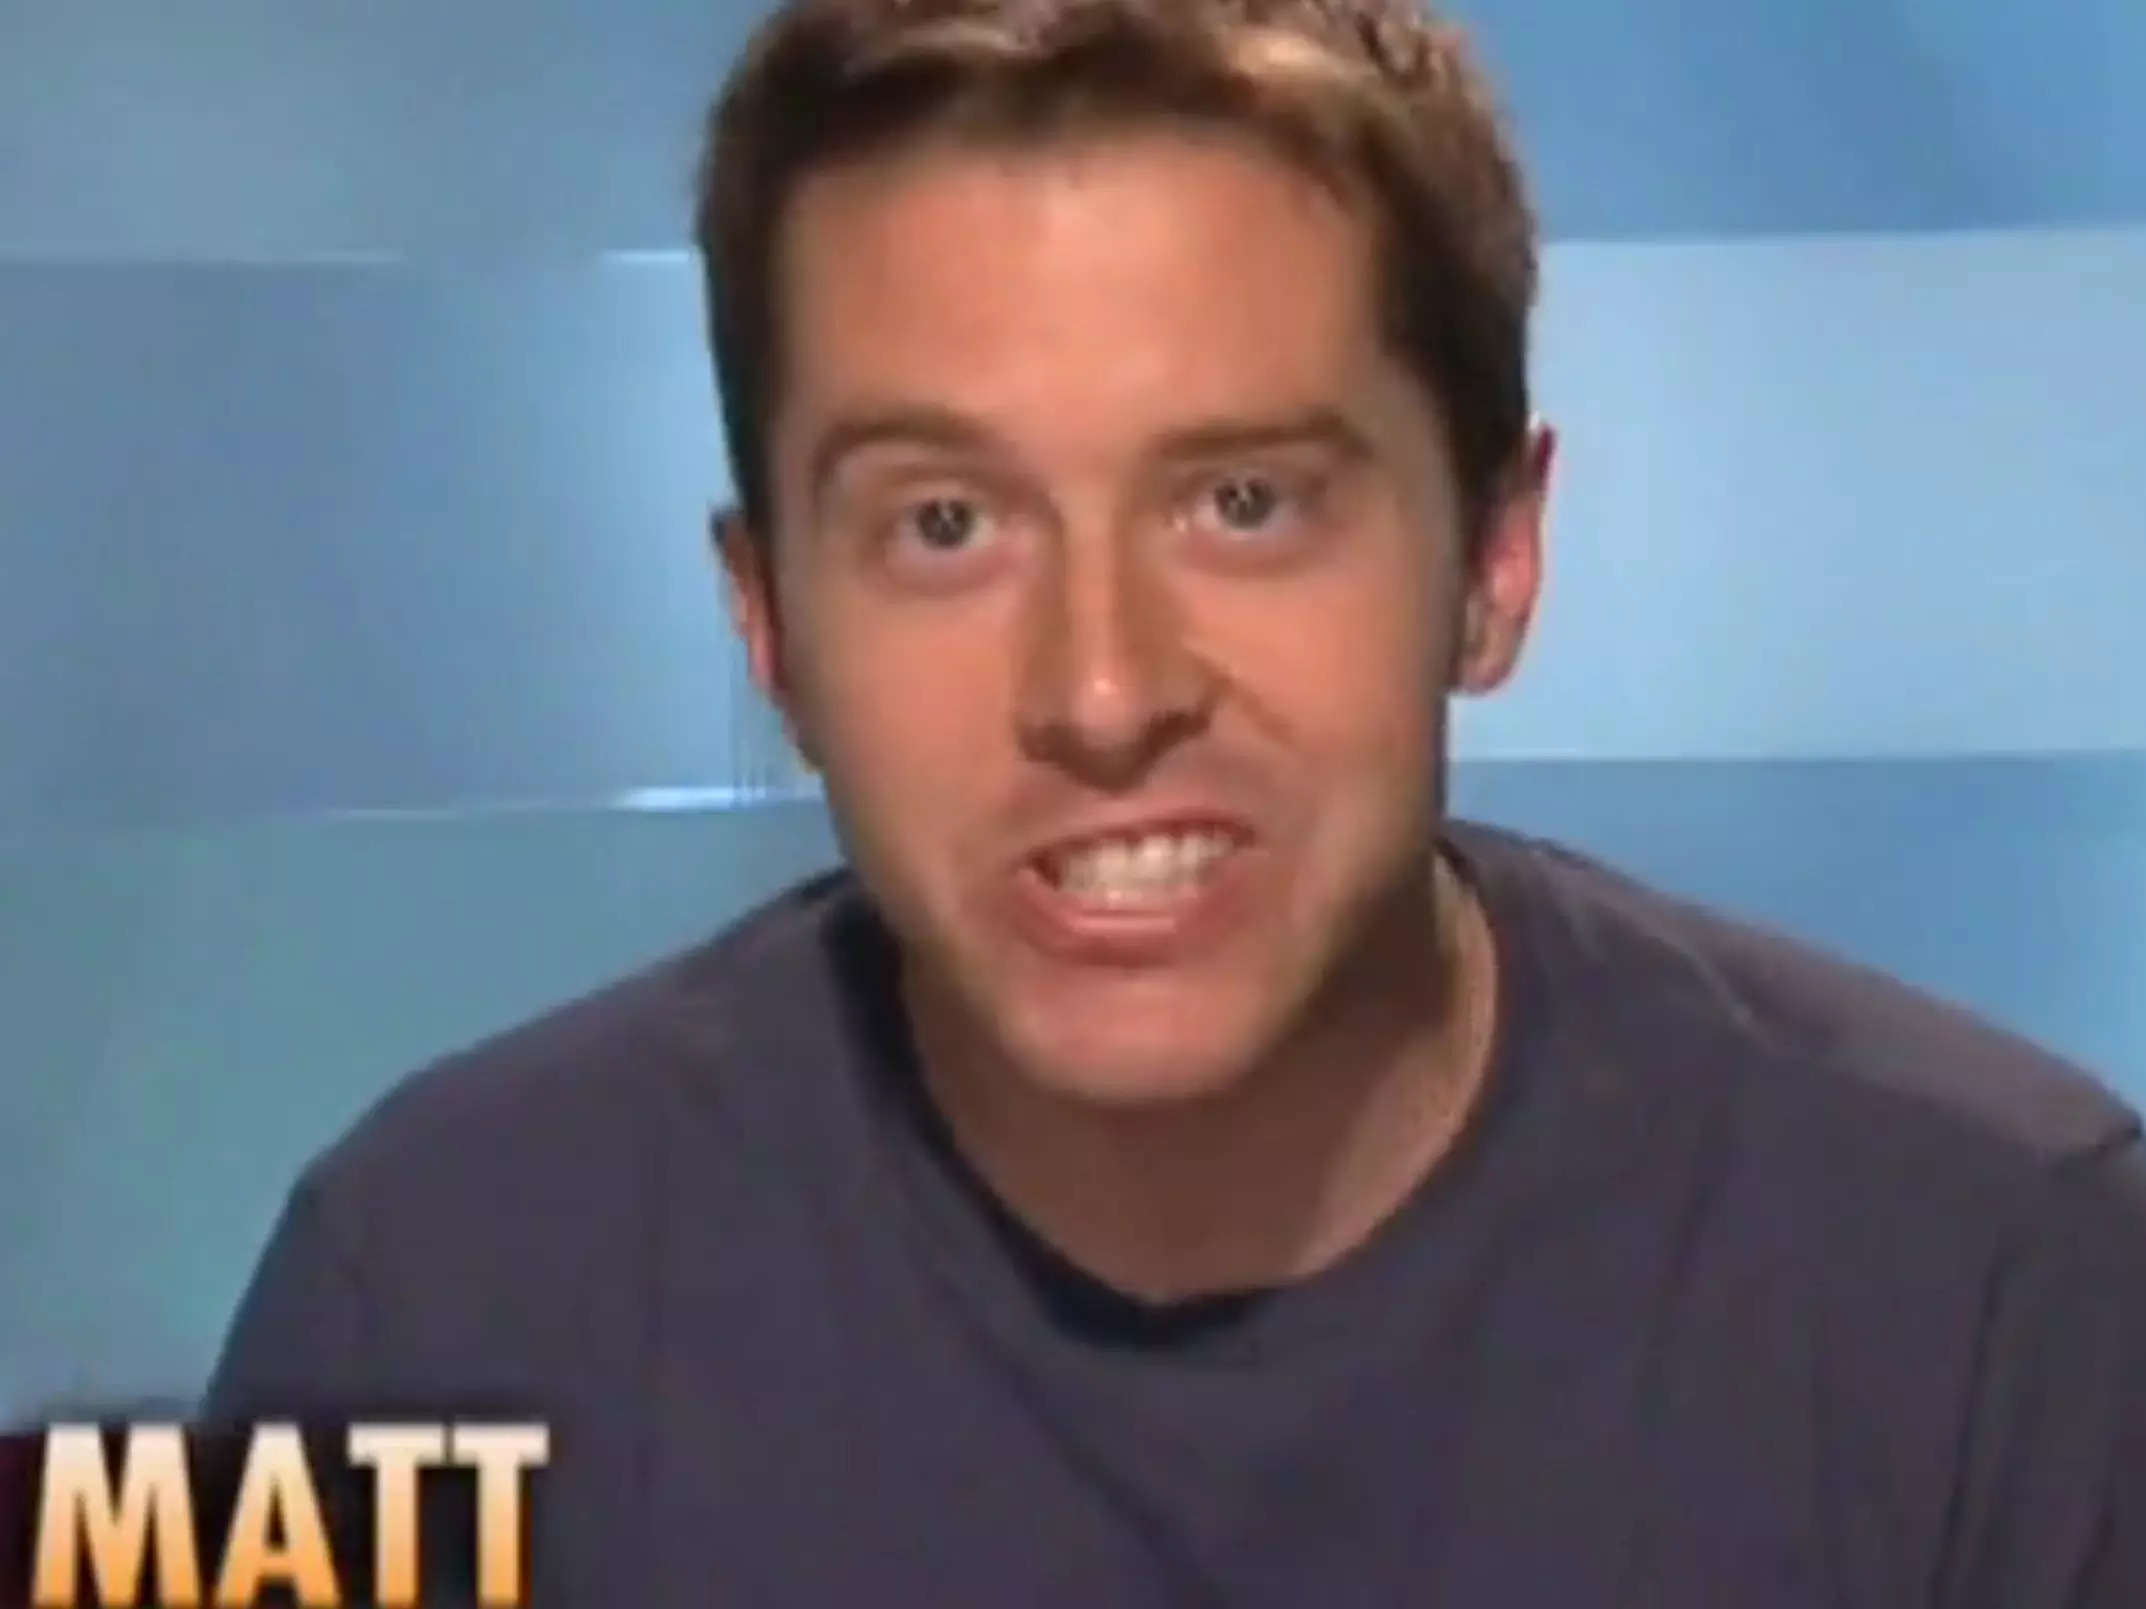 Matt Hoffman on "Big Brother" season 12